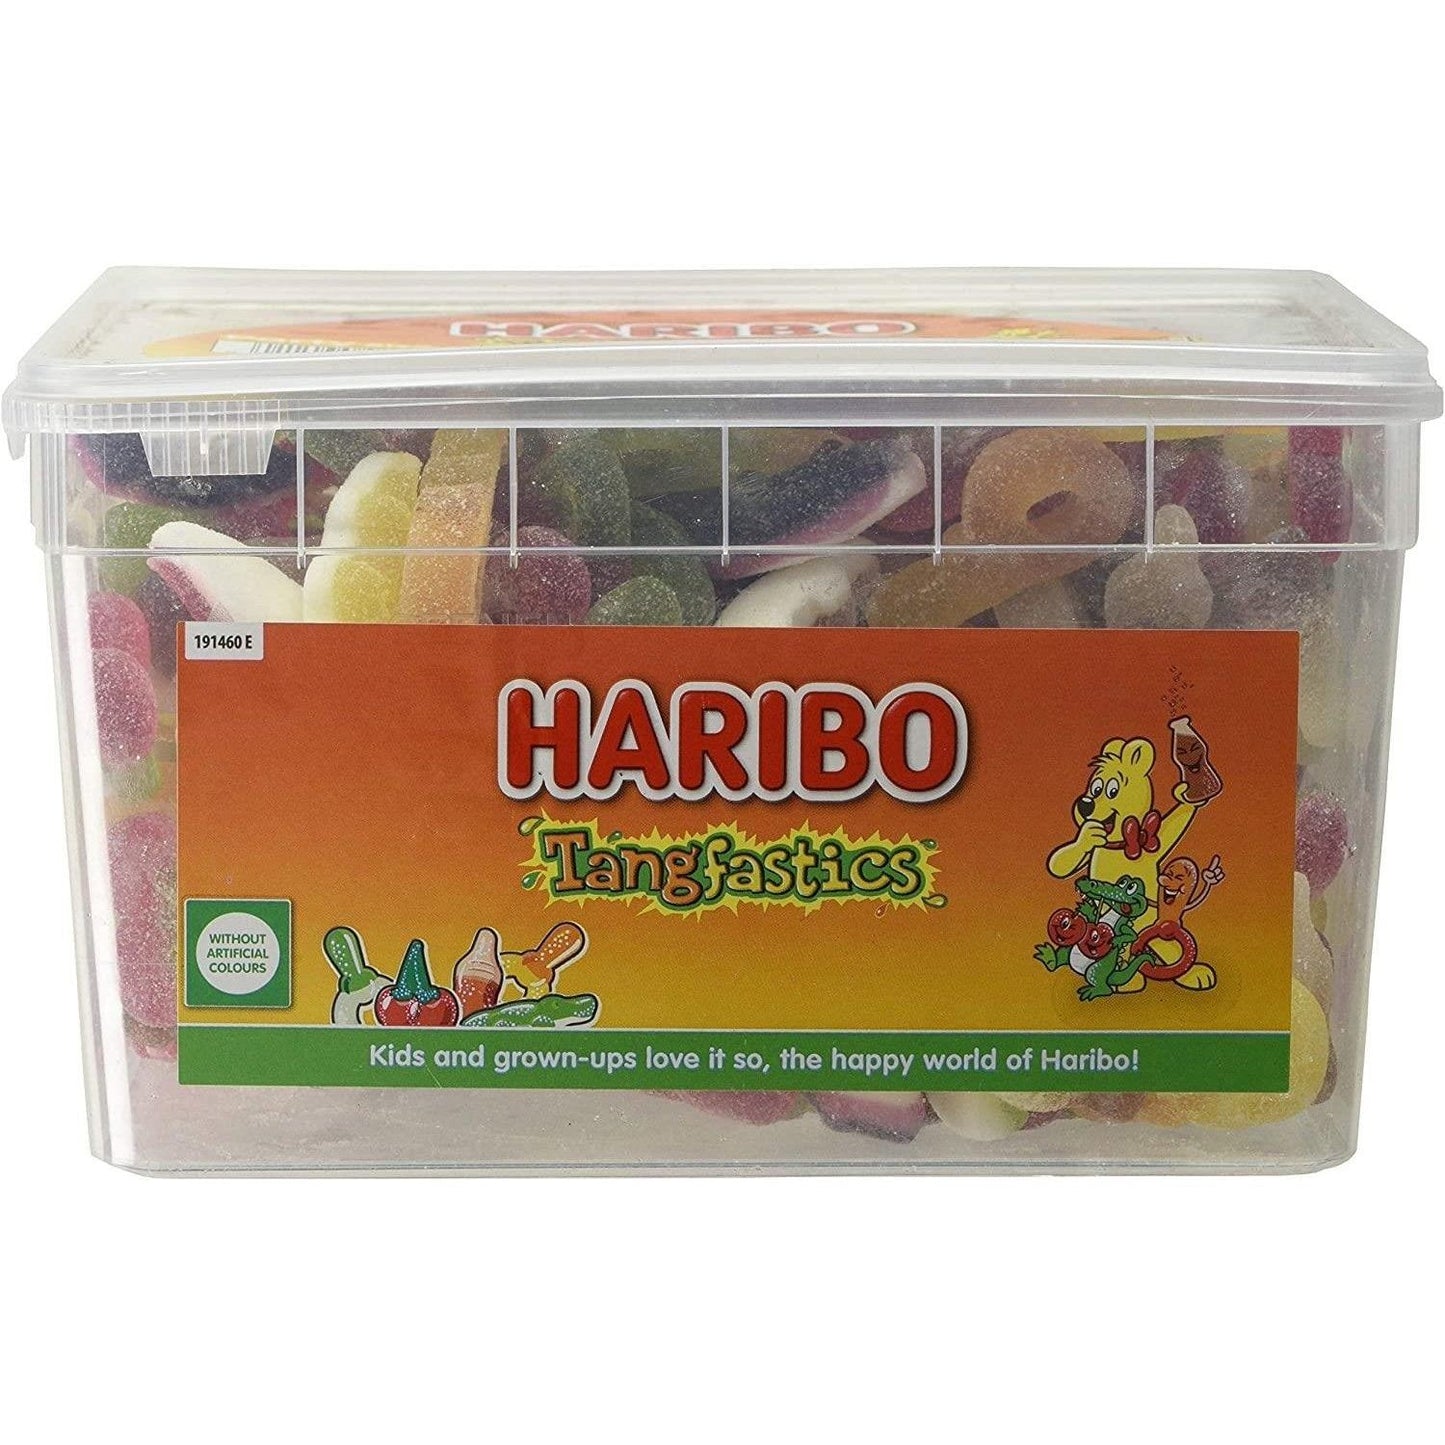 Haribo Tangtastics Box 1750g